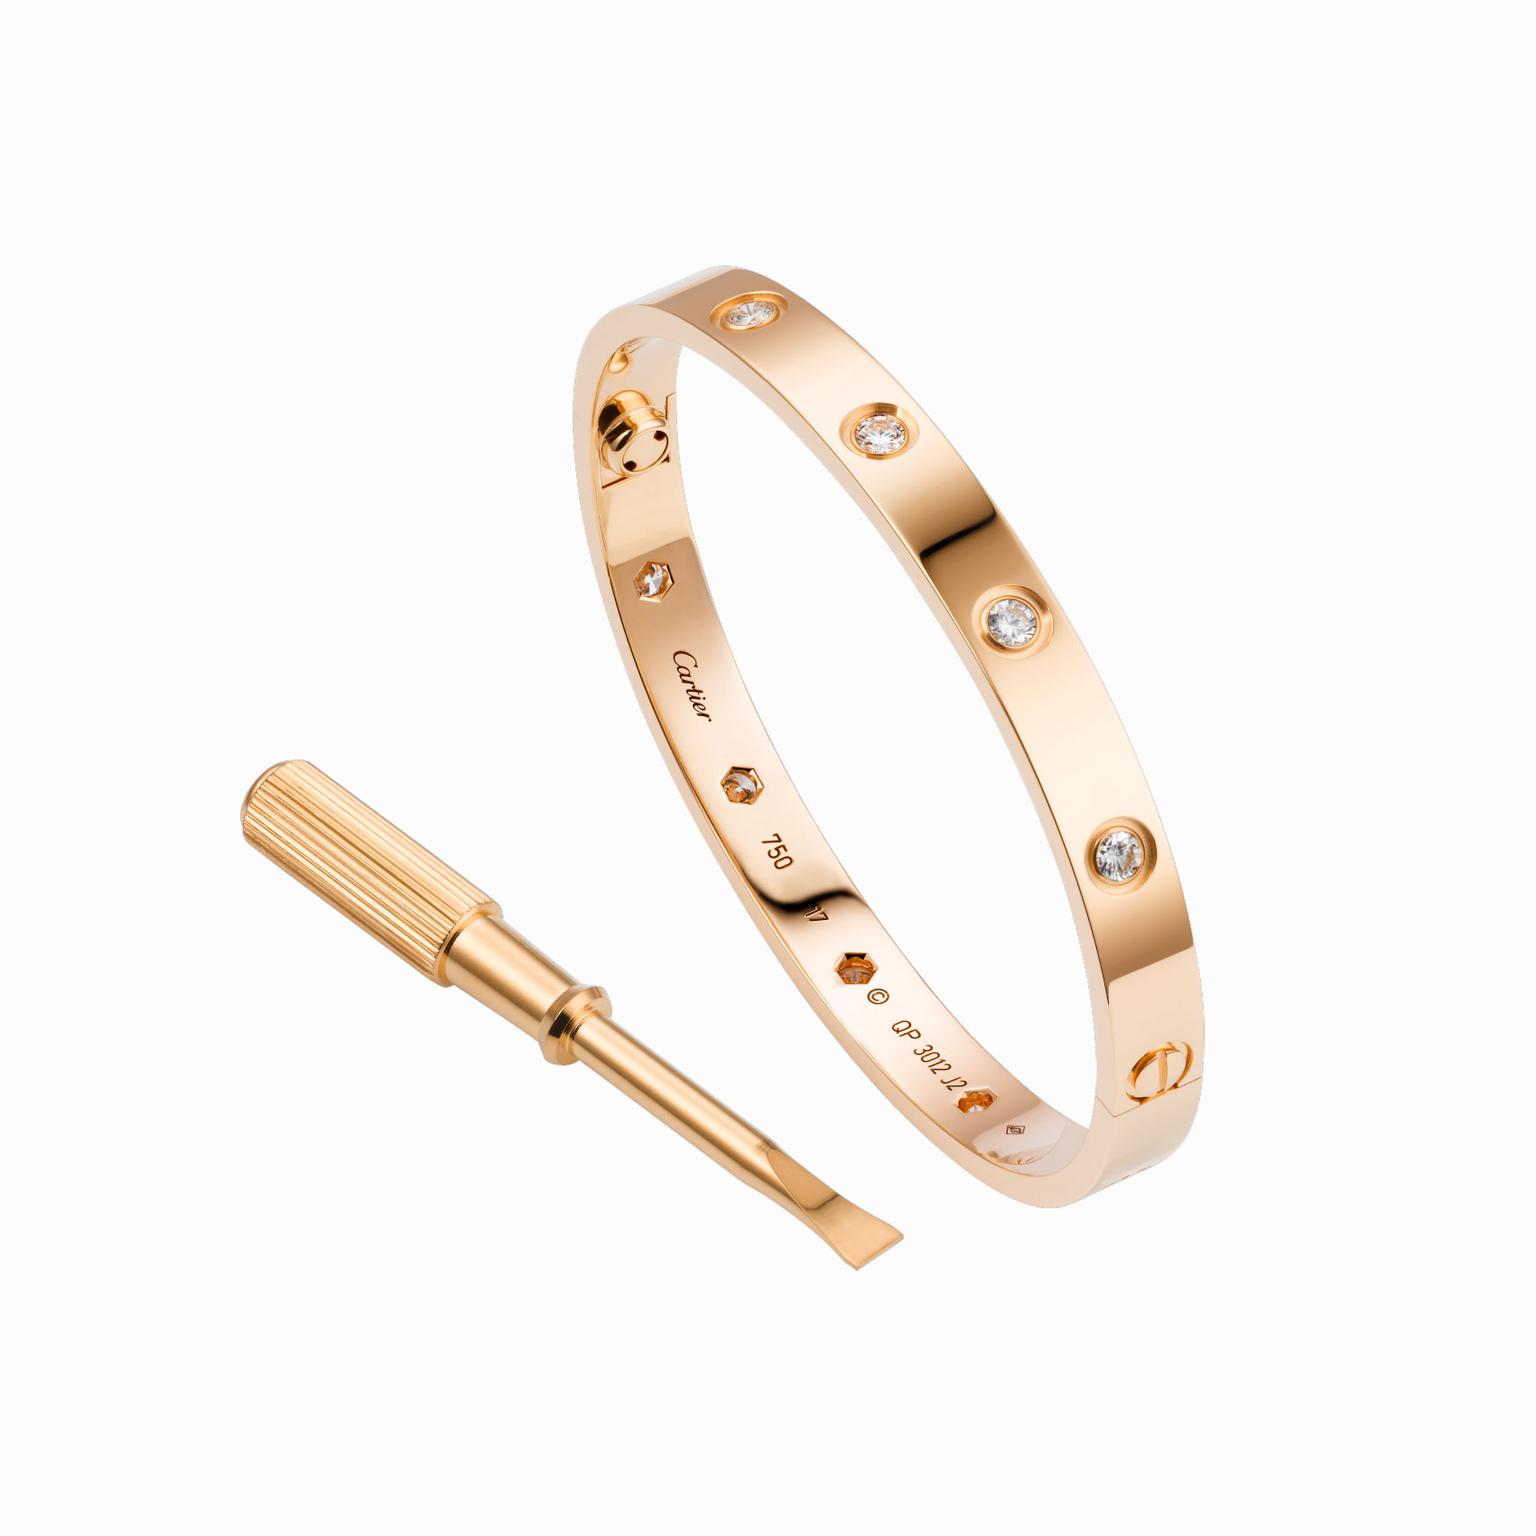 Cartier Love bracelets: why women are 